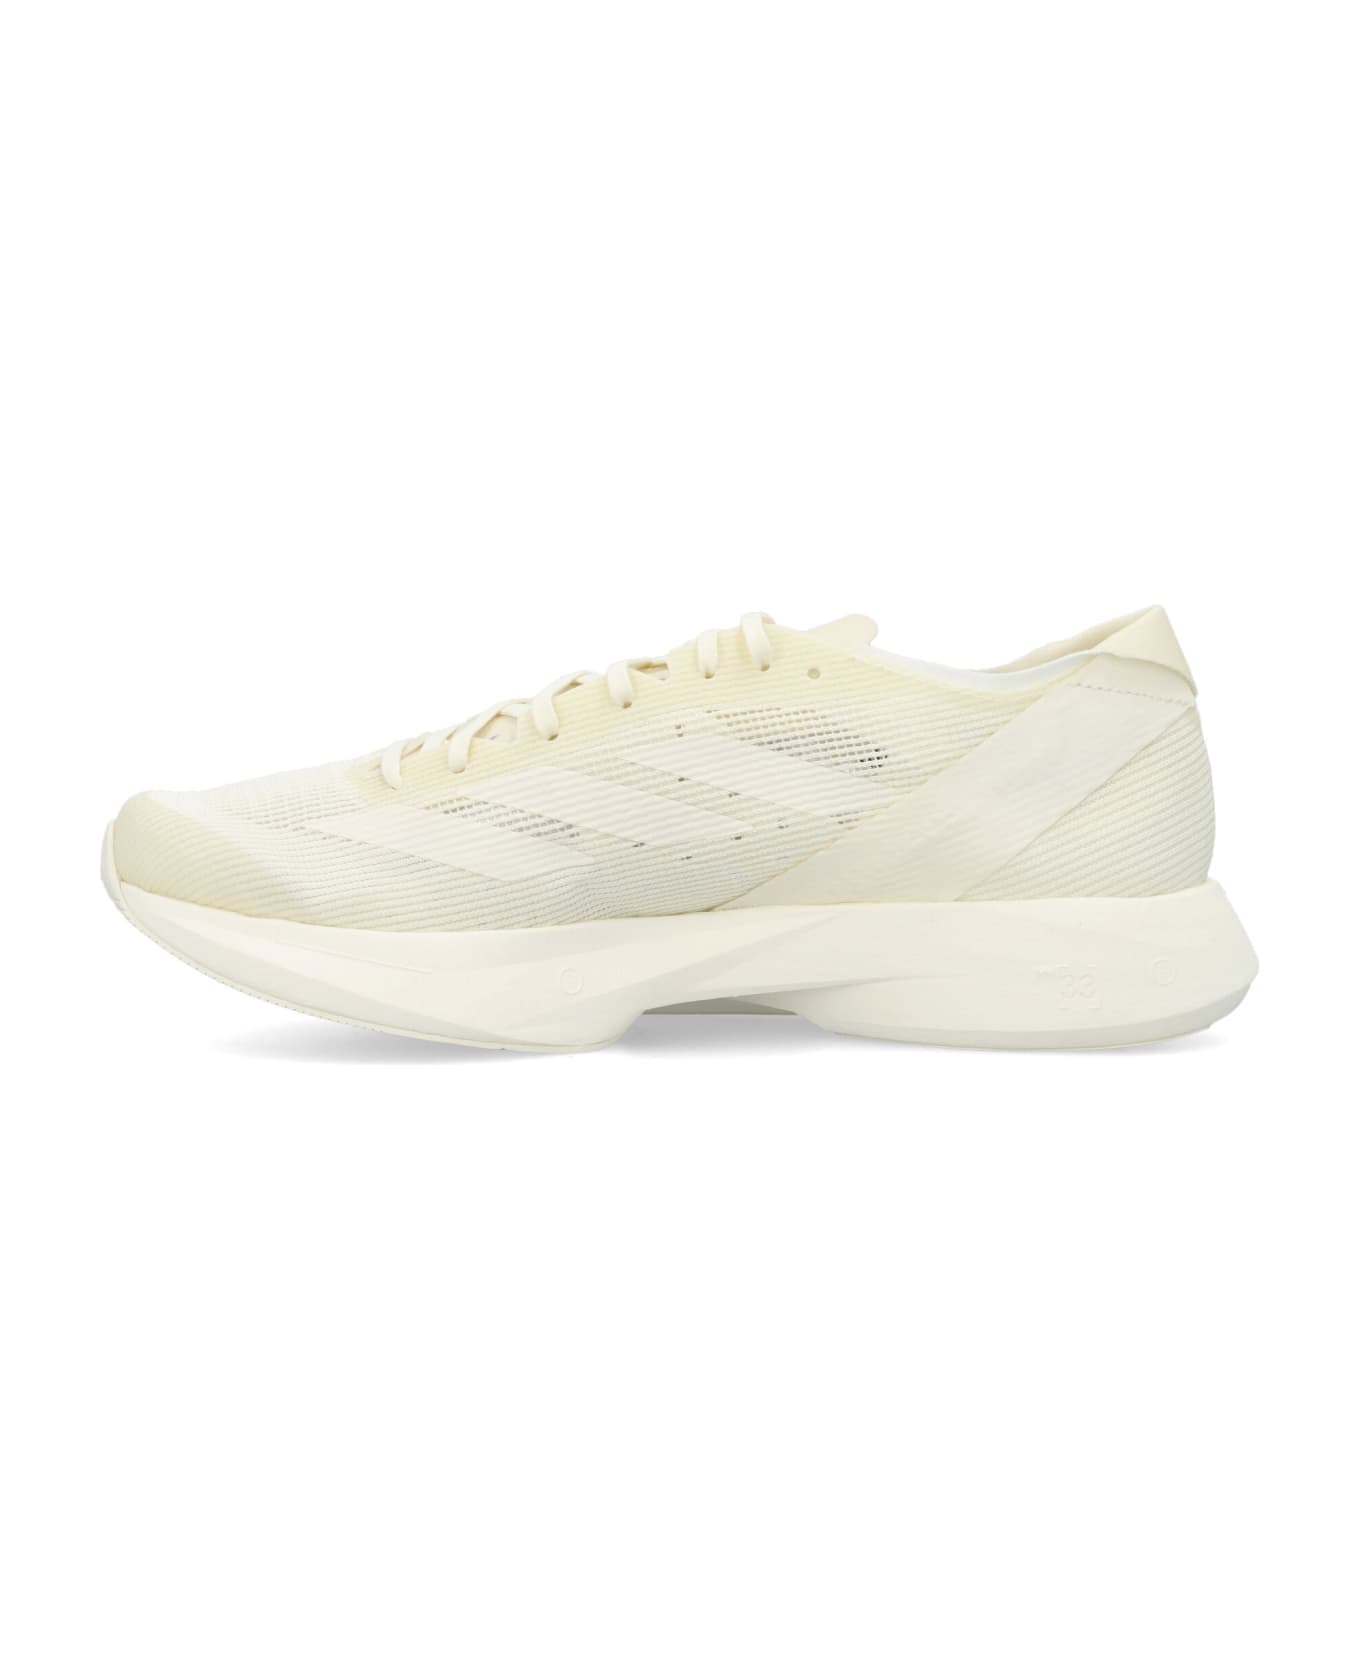 Y-3 Takumi Sen 10 Sneakers - WHITE